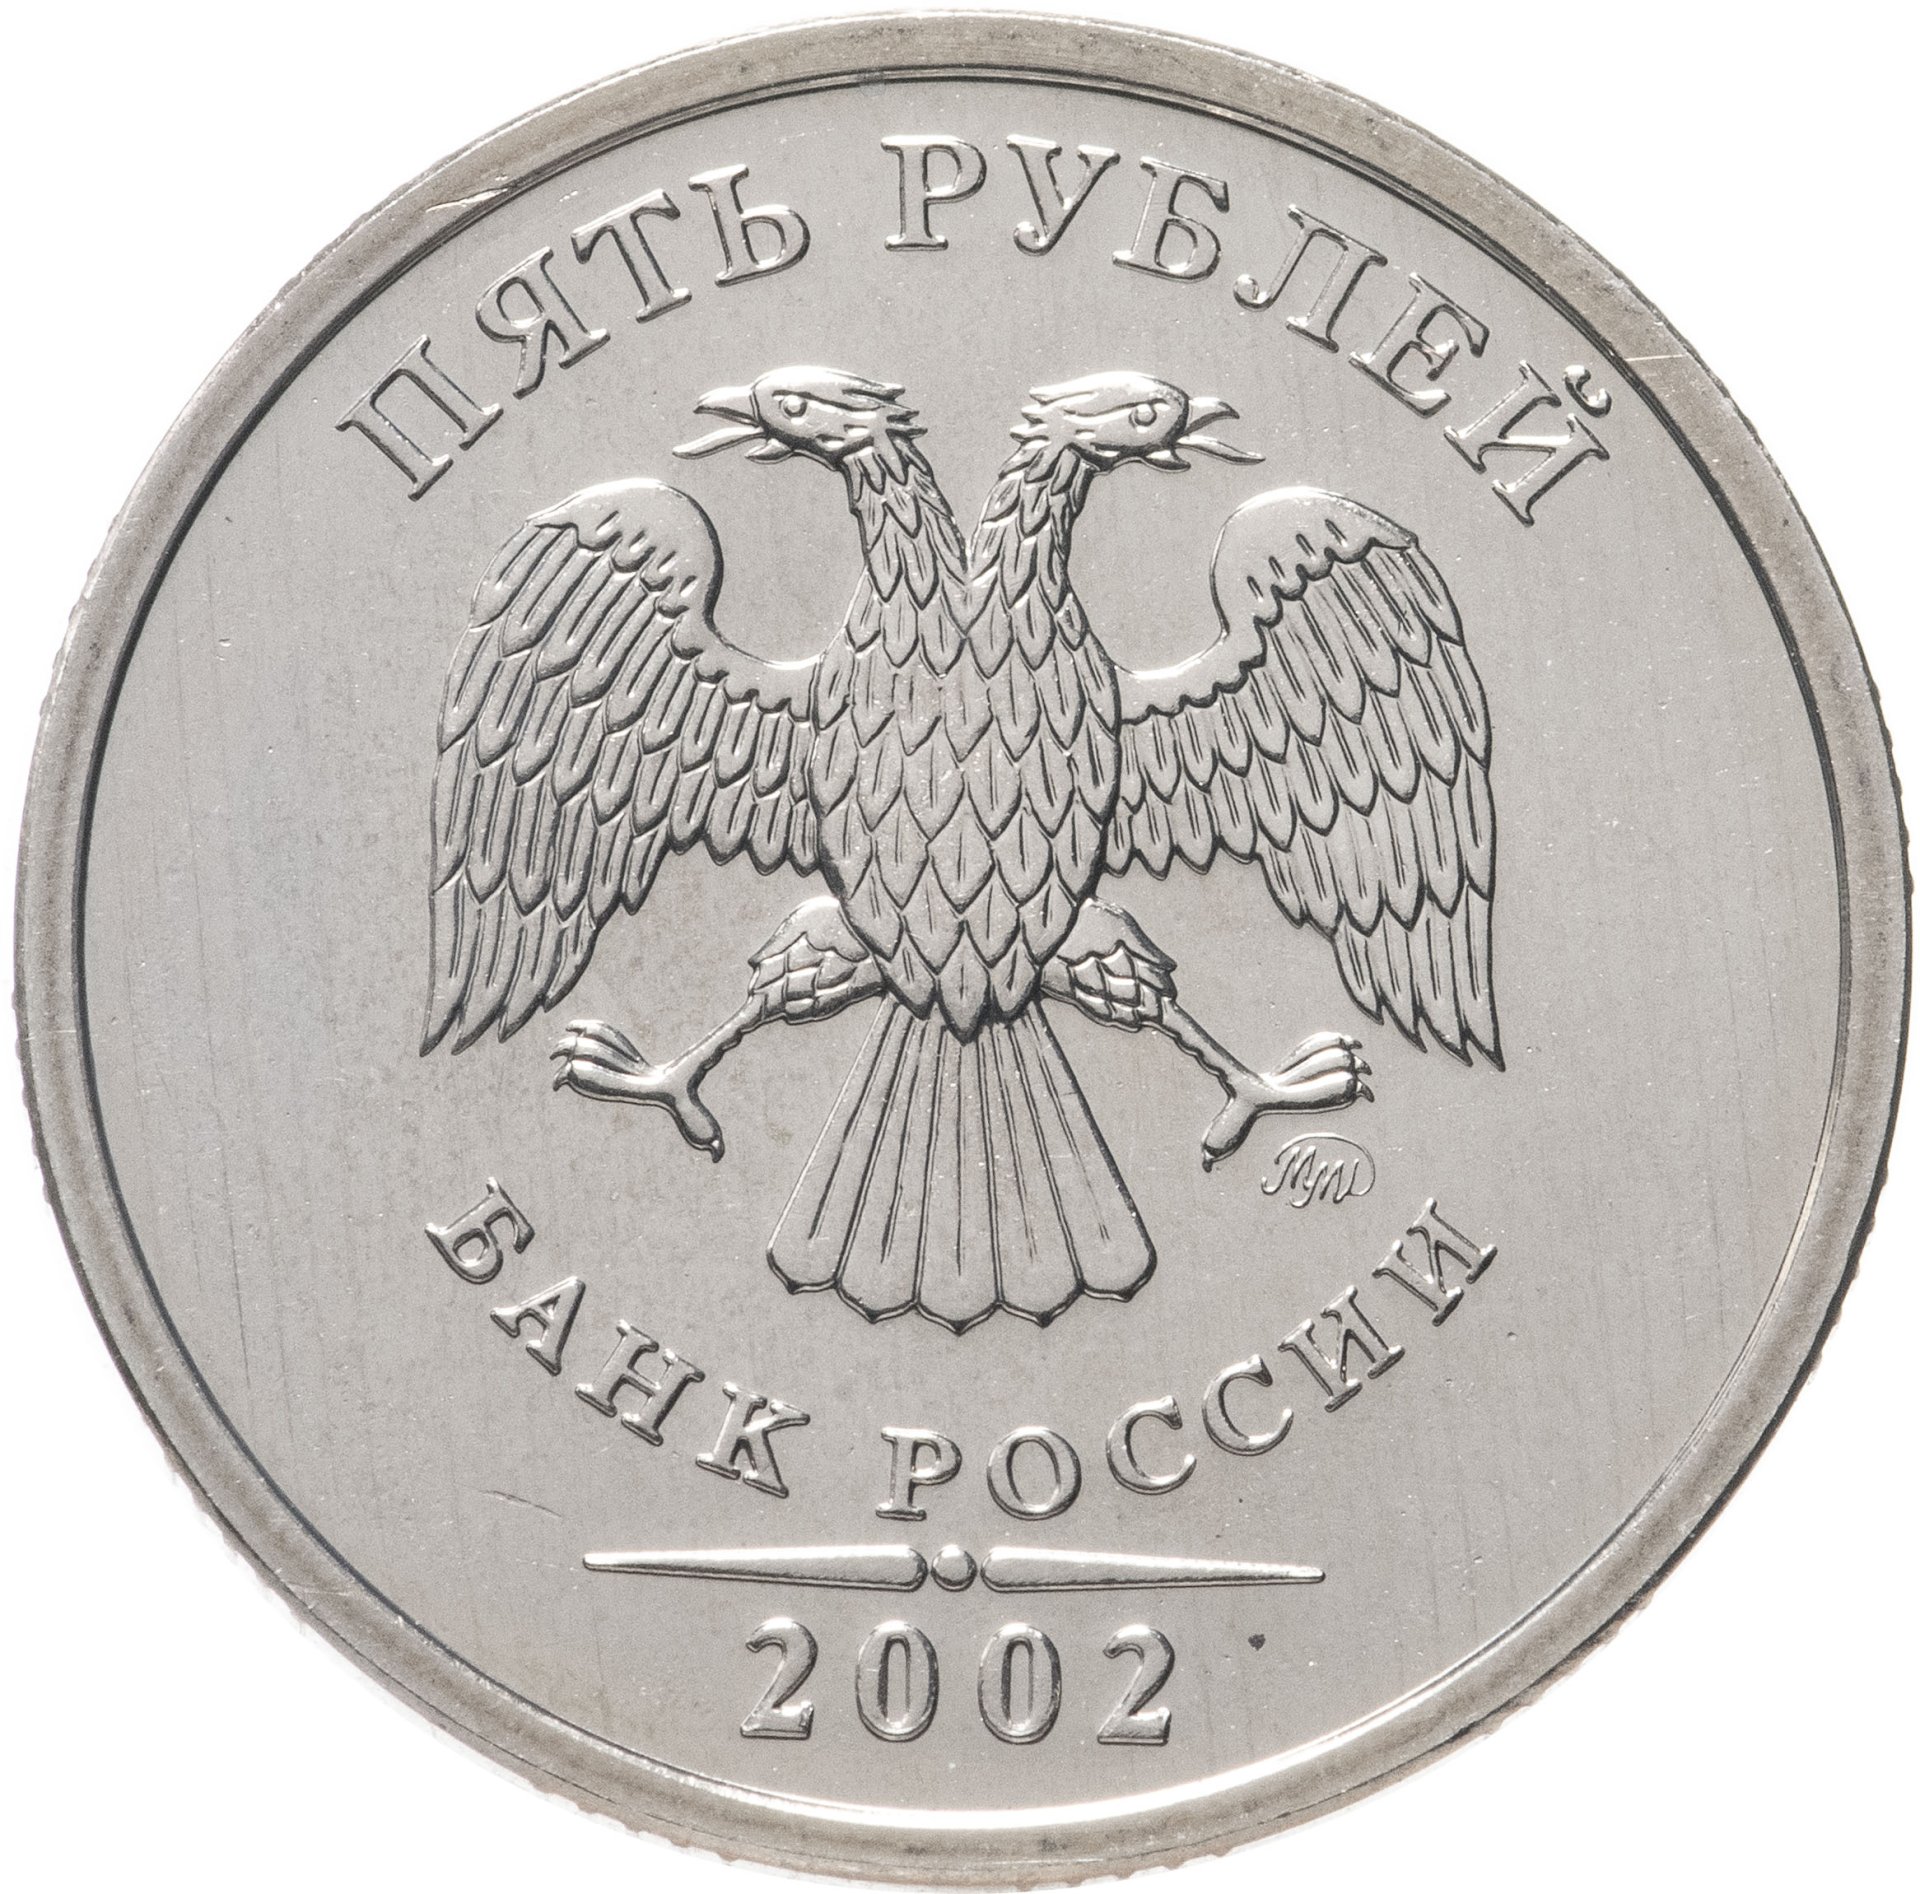 5 рублей стороны. Монета 5 рублей 2002 года СПМД. 5 Рублей 2002. Монета а 1 рубль 2002. Аверс 2 рубля.